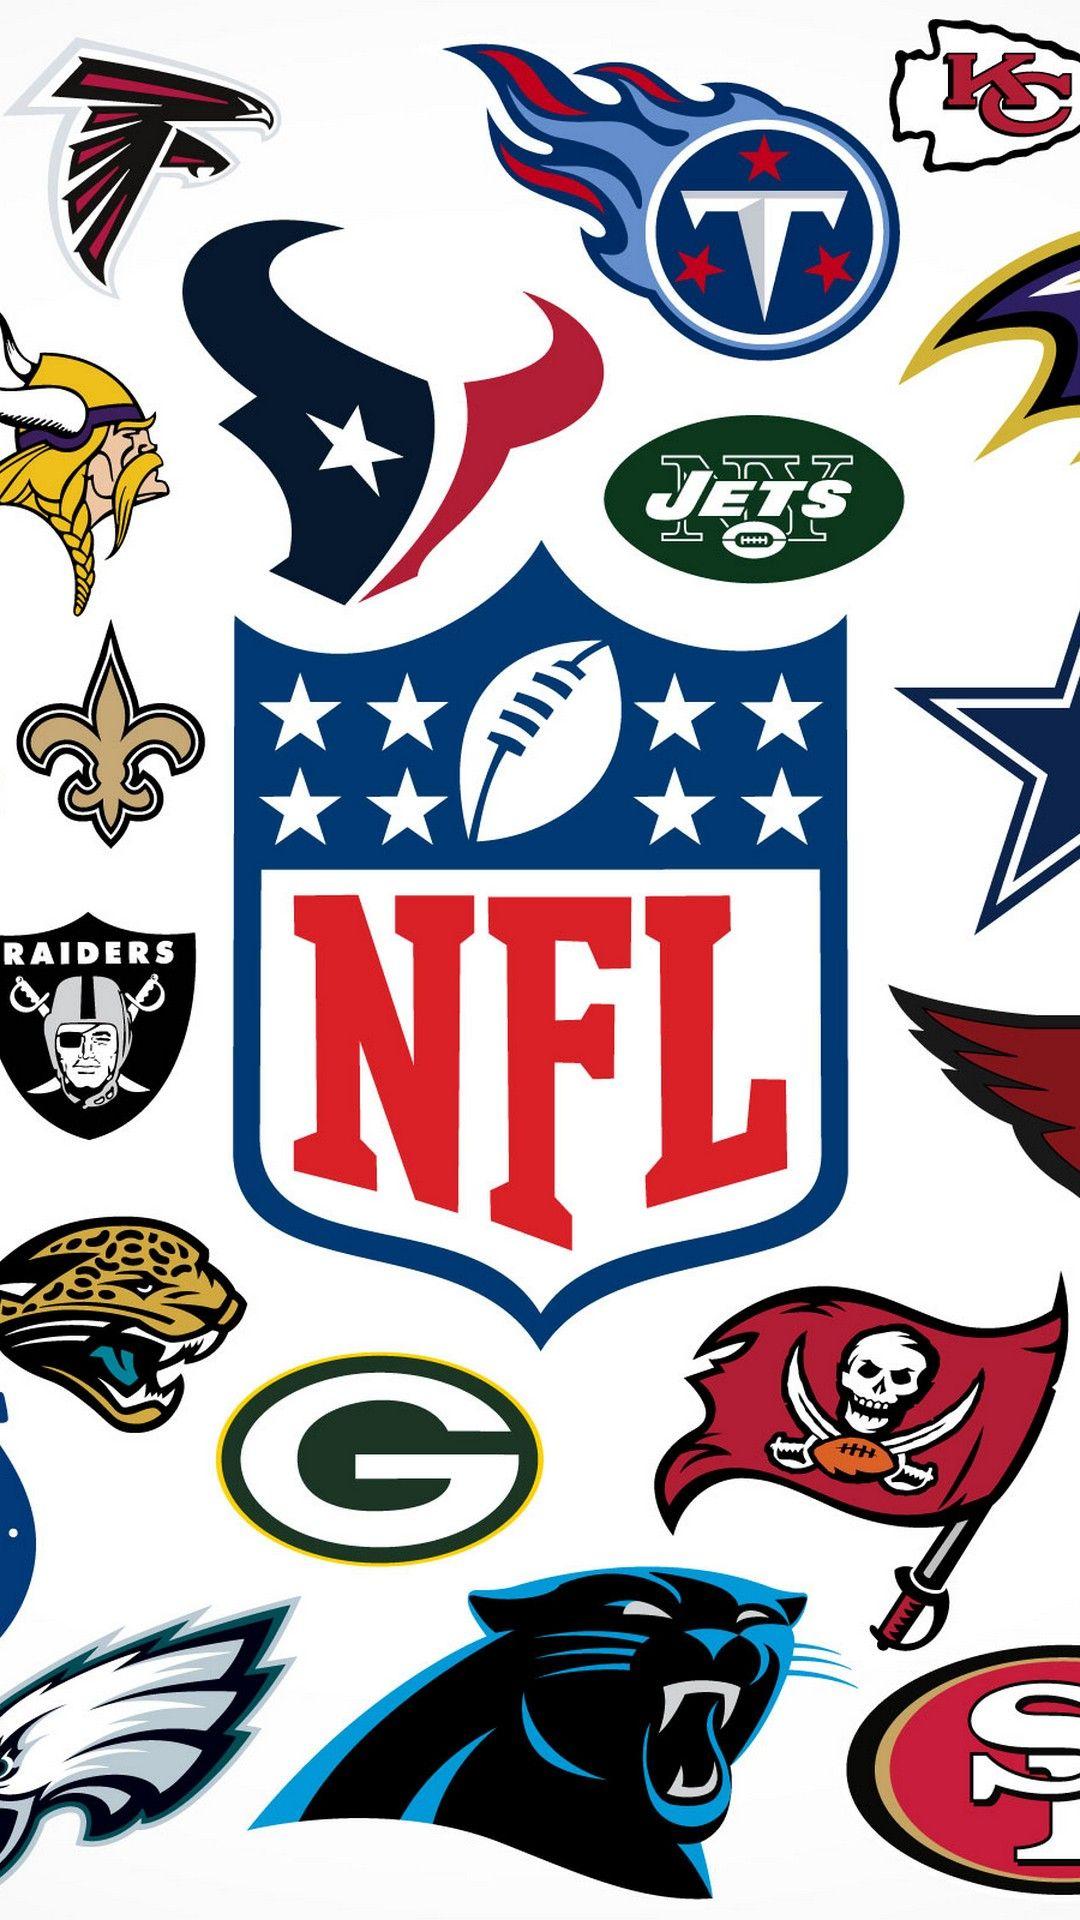 NFL iPhone X Wallpaper. Football wallpaper, Nfl, Nfl logo